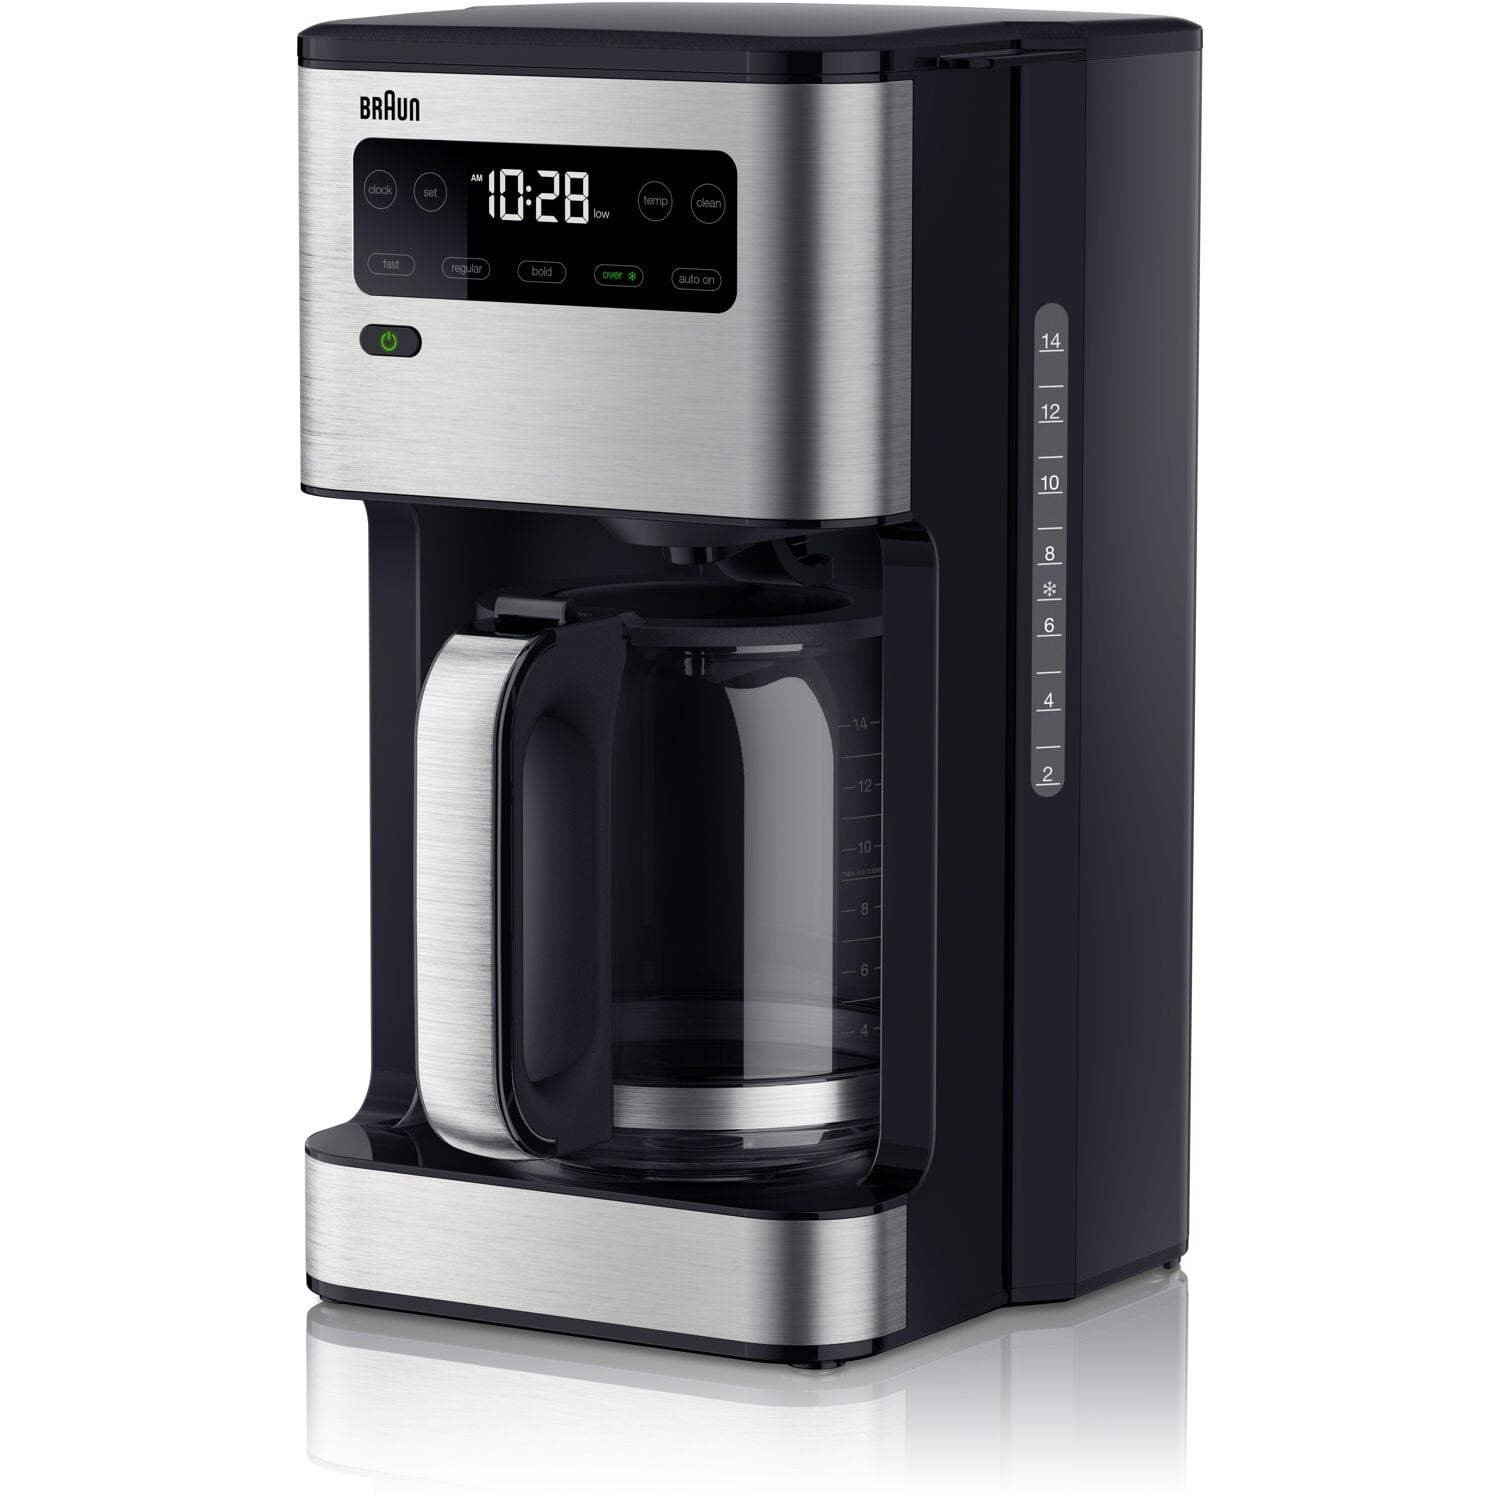 PureFlavor 14-Cup Drip Coffee Maker (White), Braun